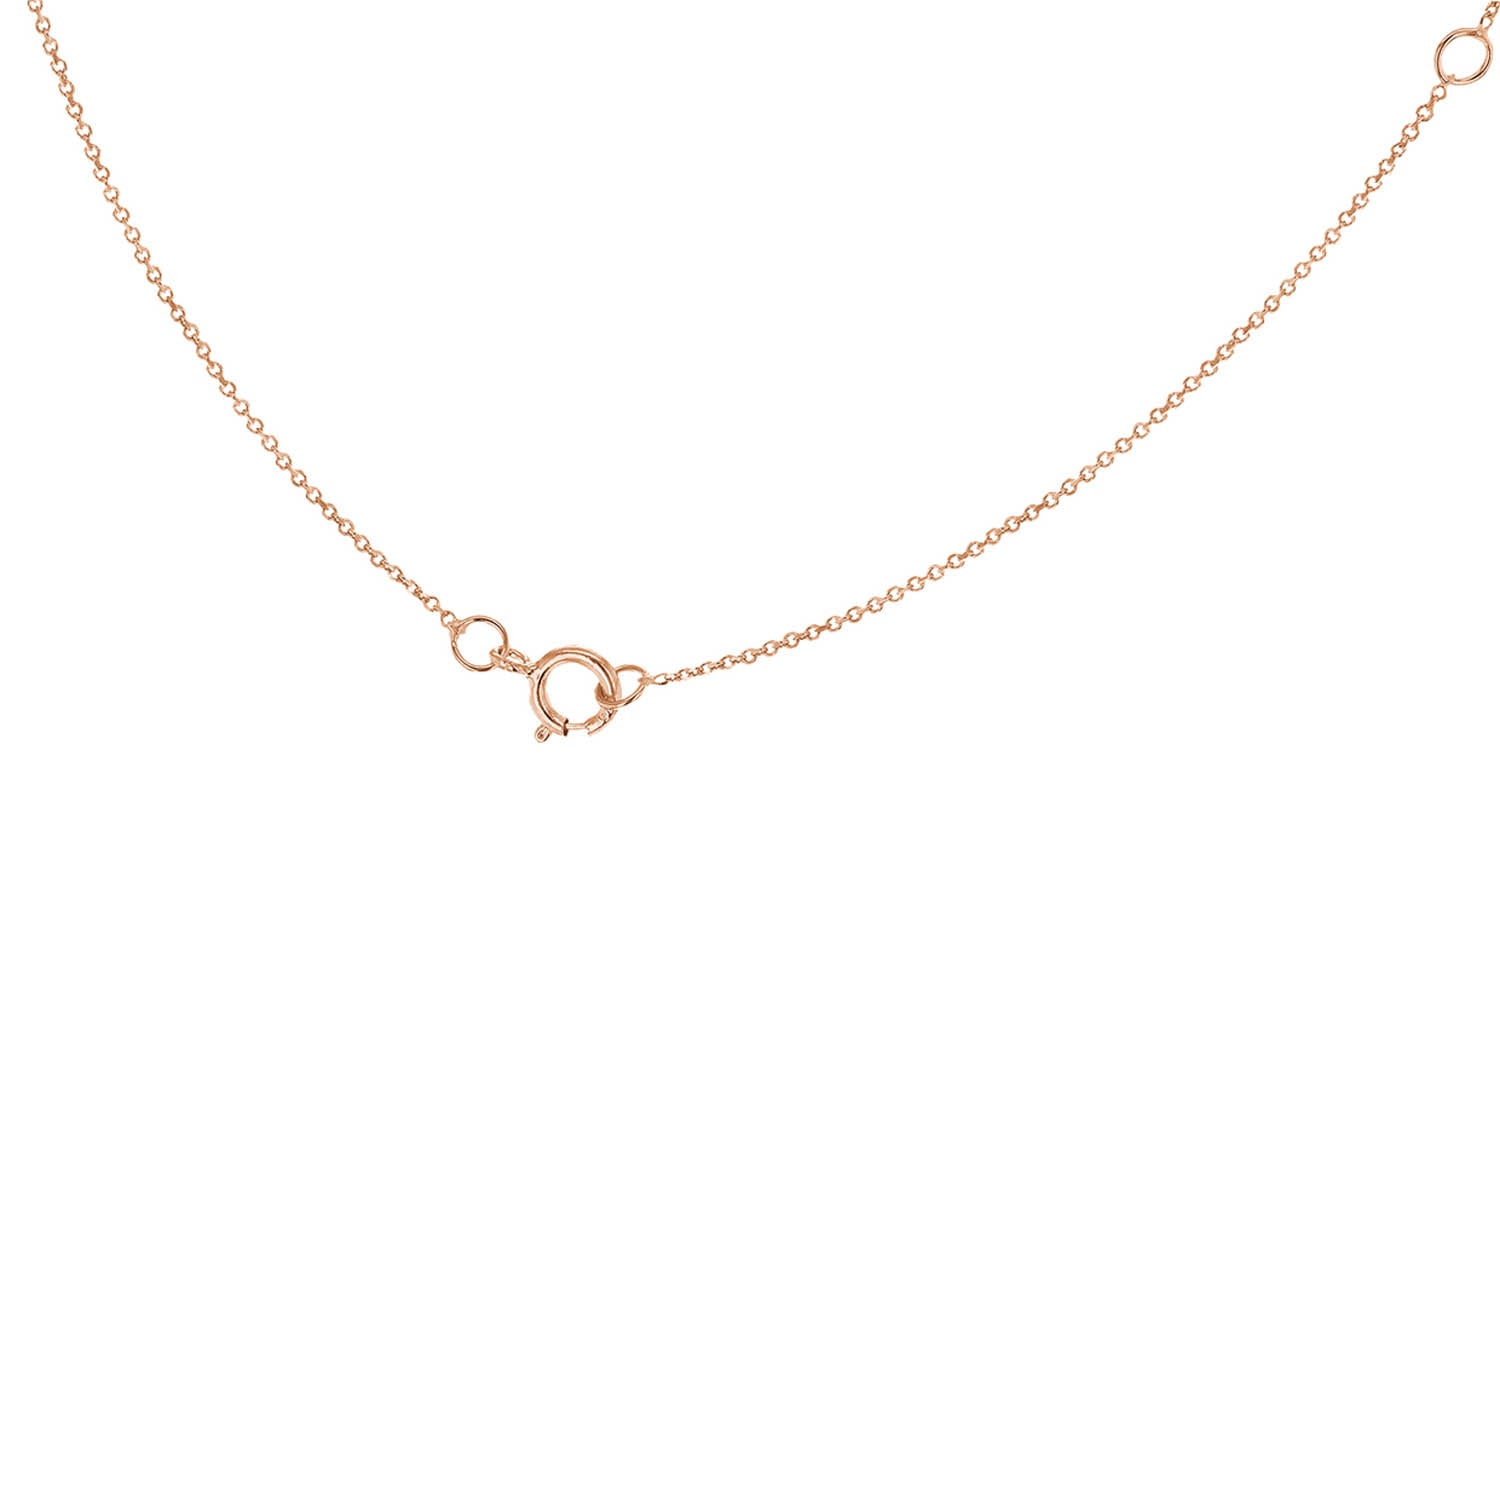 9ct Rose Gold 'G' Initial Adjustable Letter Necklace 38/43cm